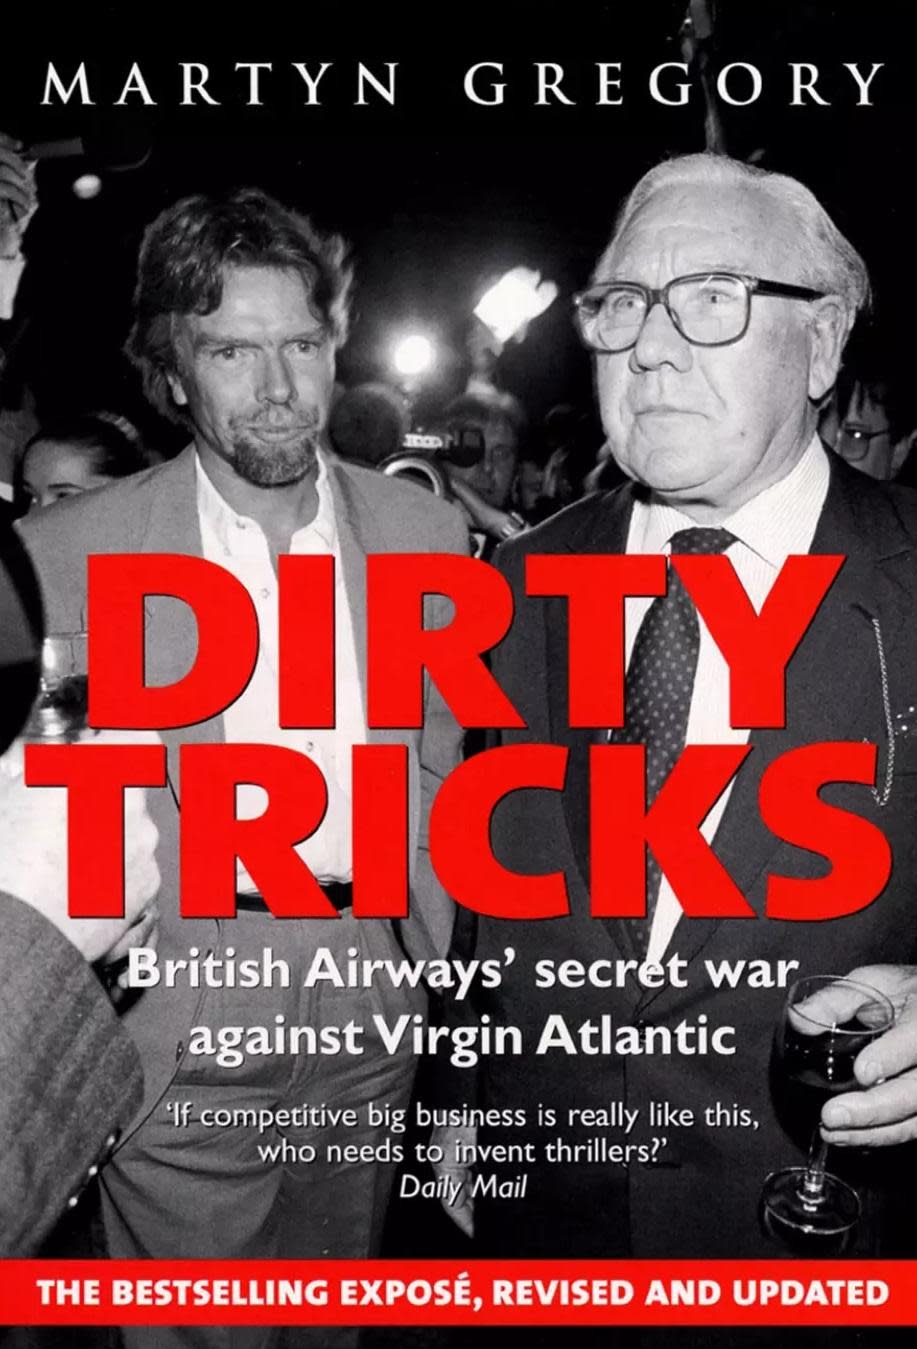 《Dirty Tricks》描述英航與維珍的「污糟戰爭」。